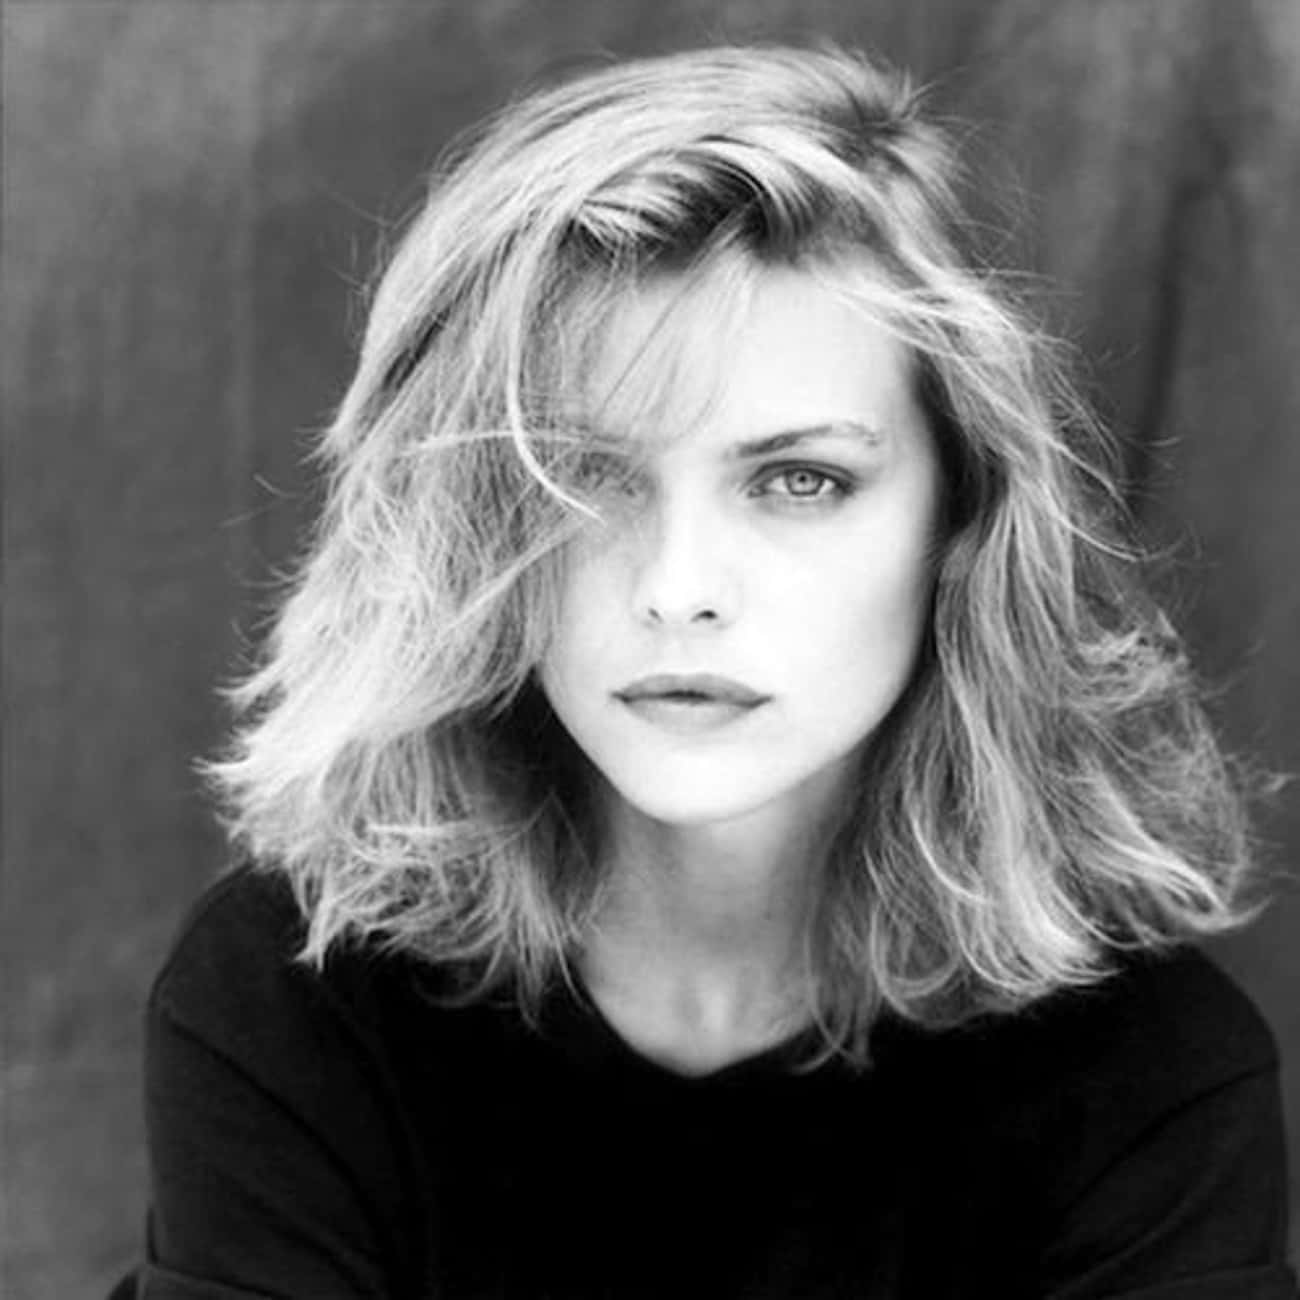 Young Michelle Pfeiffer in a Black Shirt Closeup Headshot